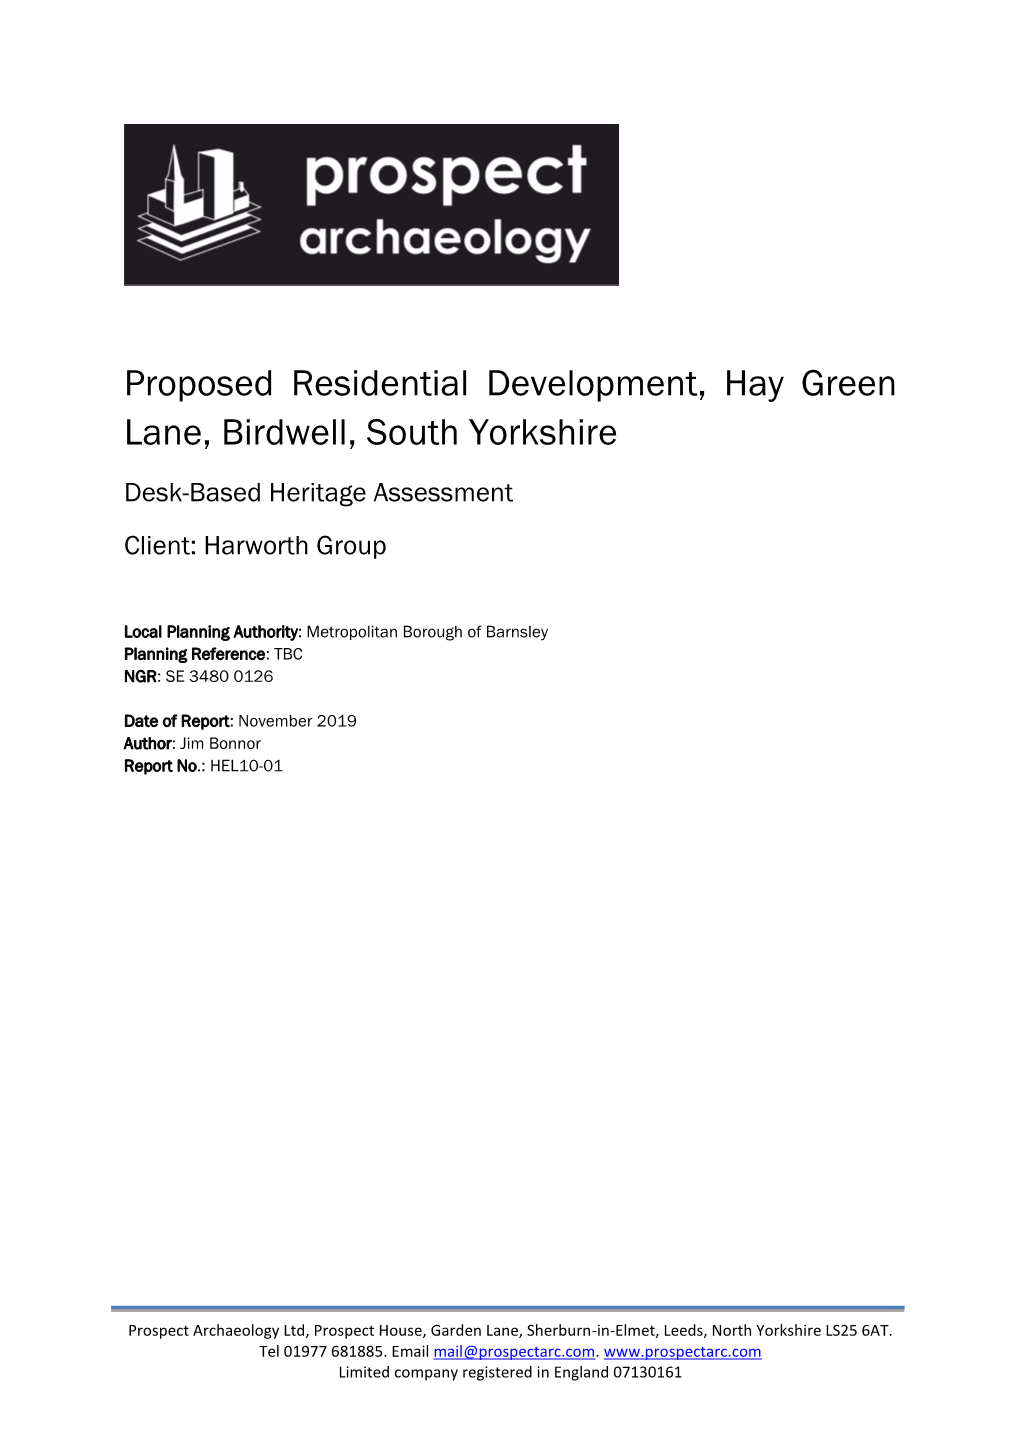 Proposed Residential Development, Hay Green Lane, Birdwell, South Yorkshire